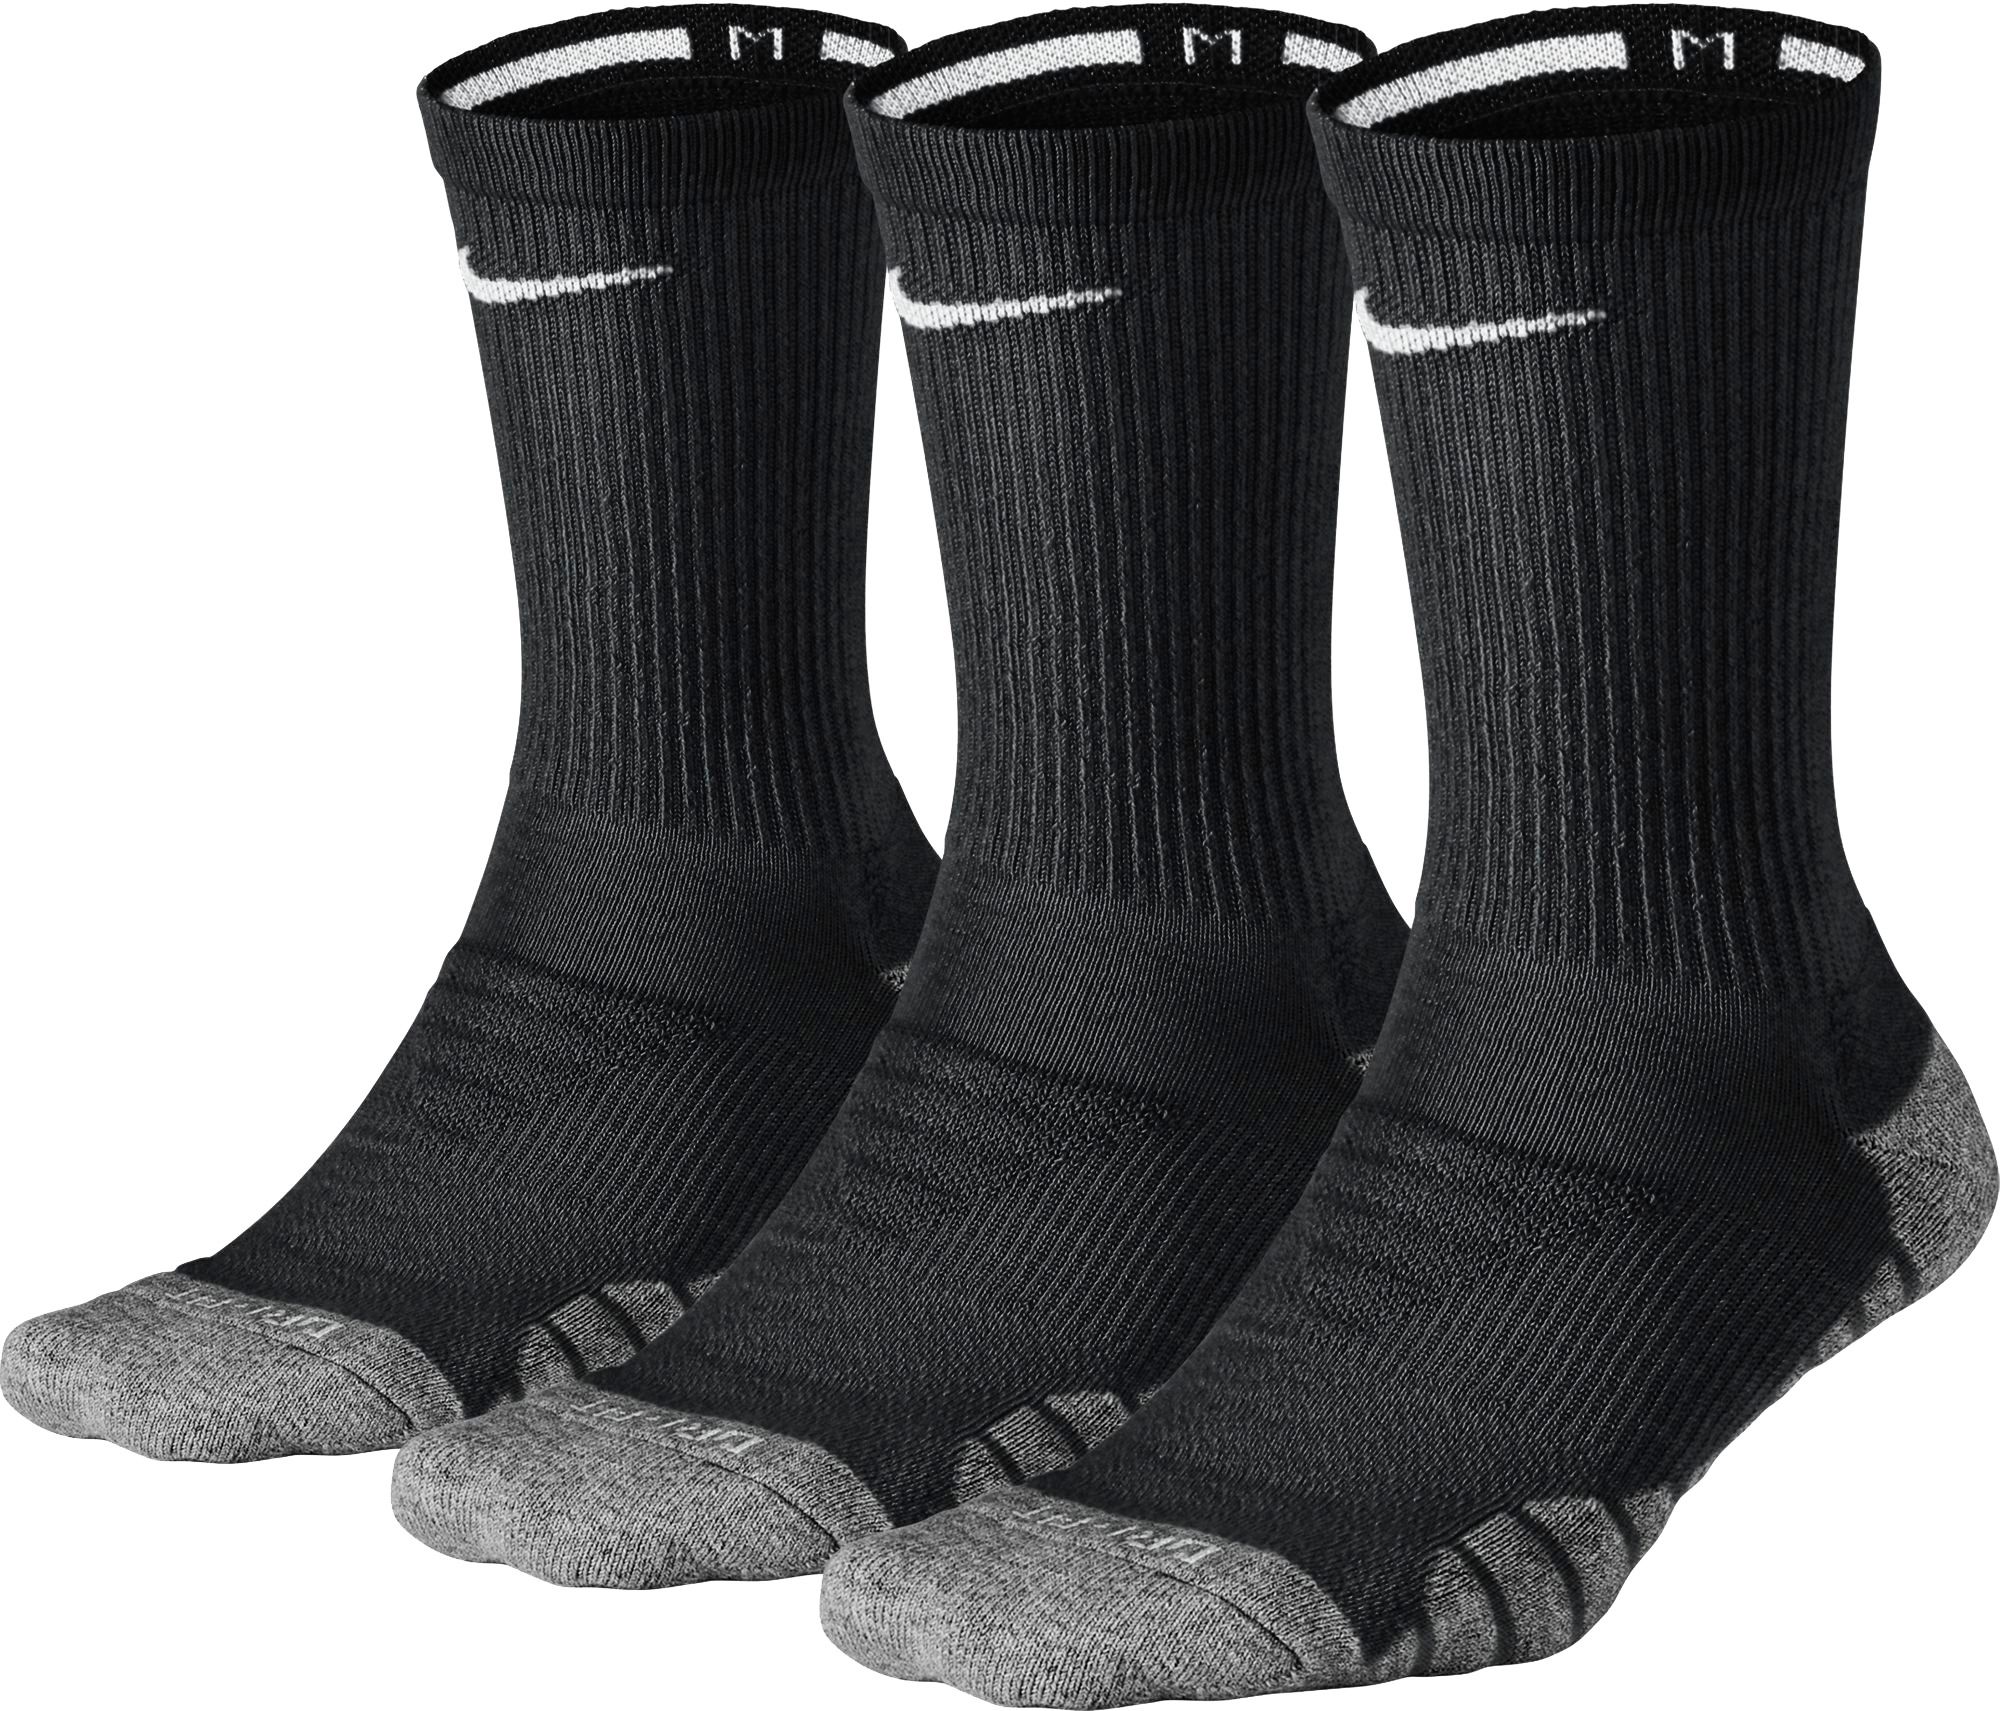 air max socks